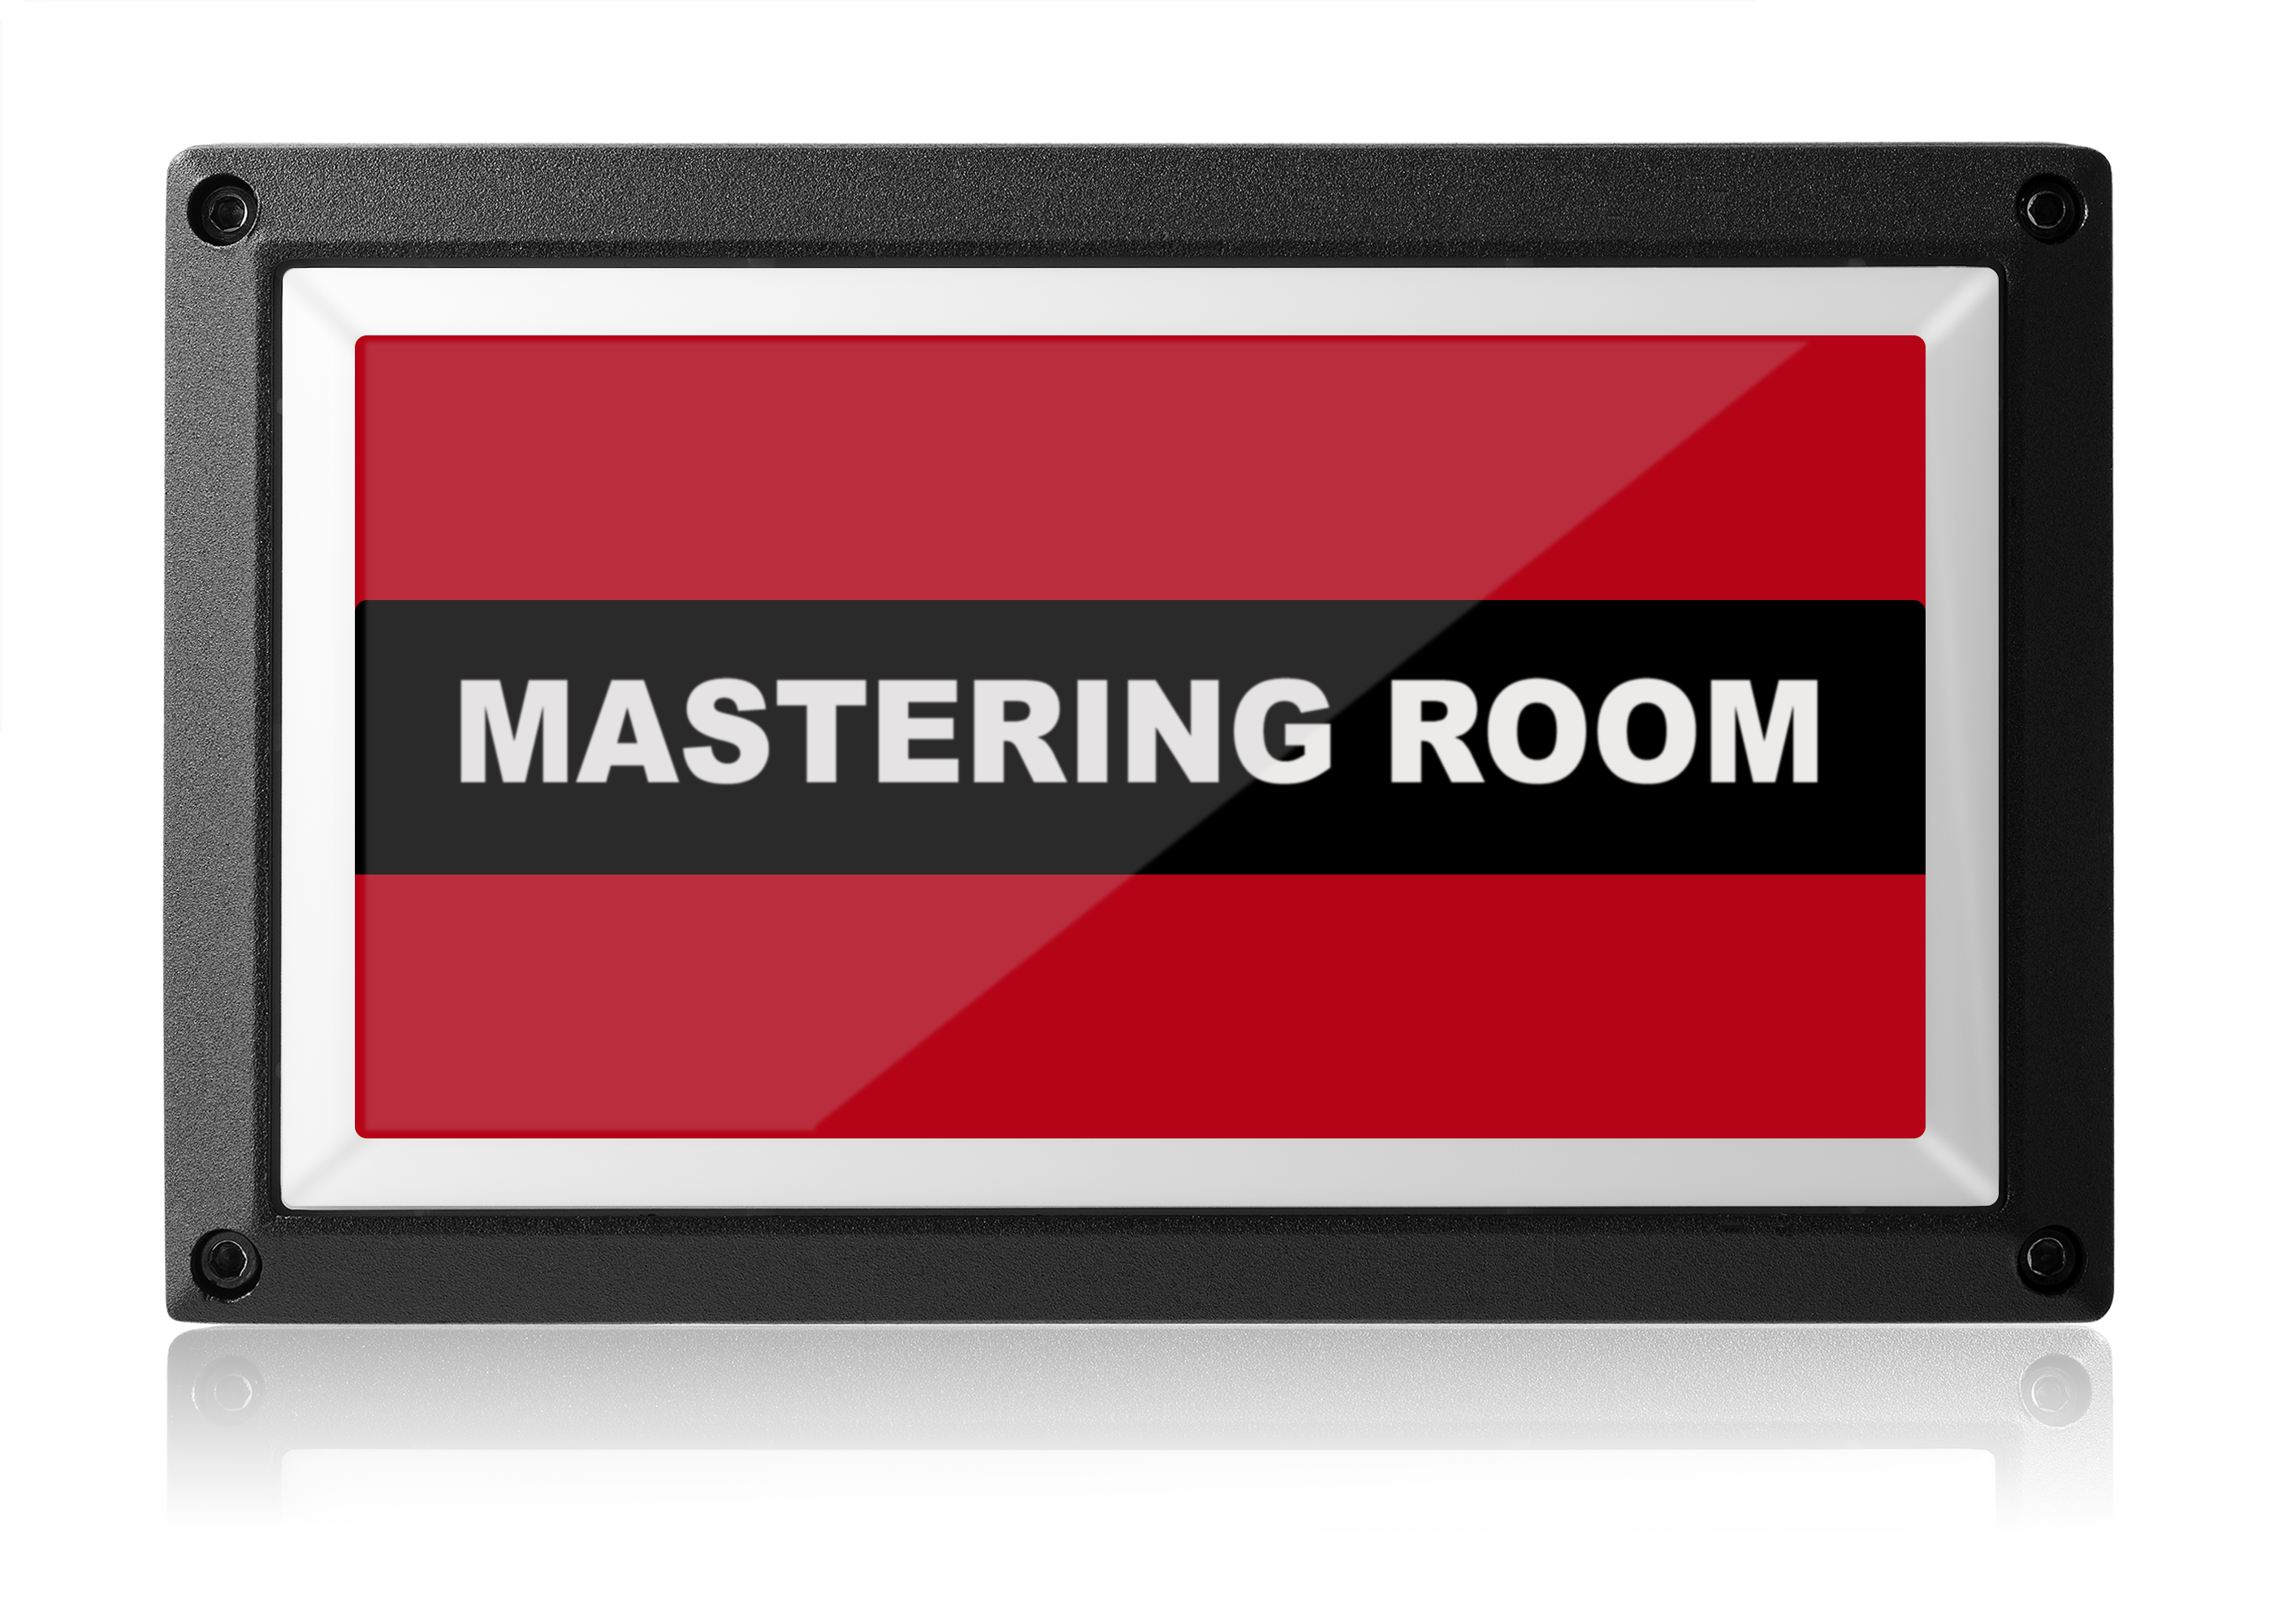 Mastering Room Light - Red ISO - Rekall Dynamics LED Sign-Red-Low Voltage (12-24v DC)-